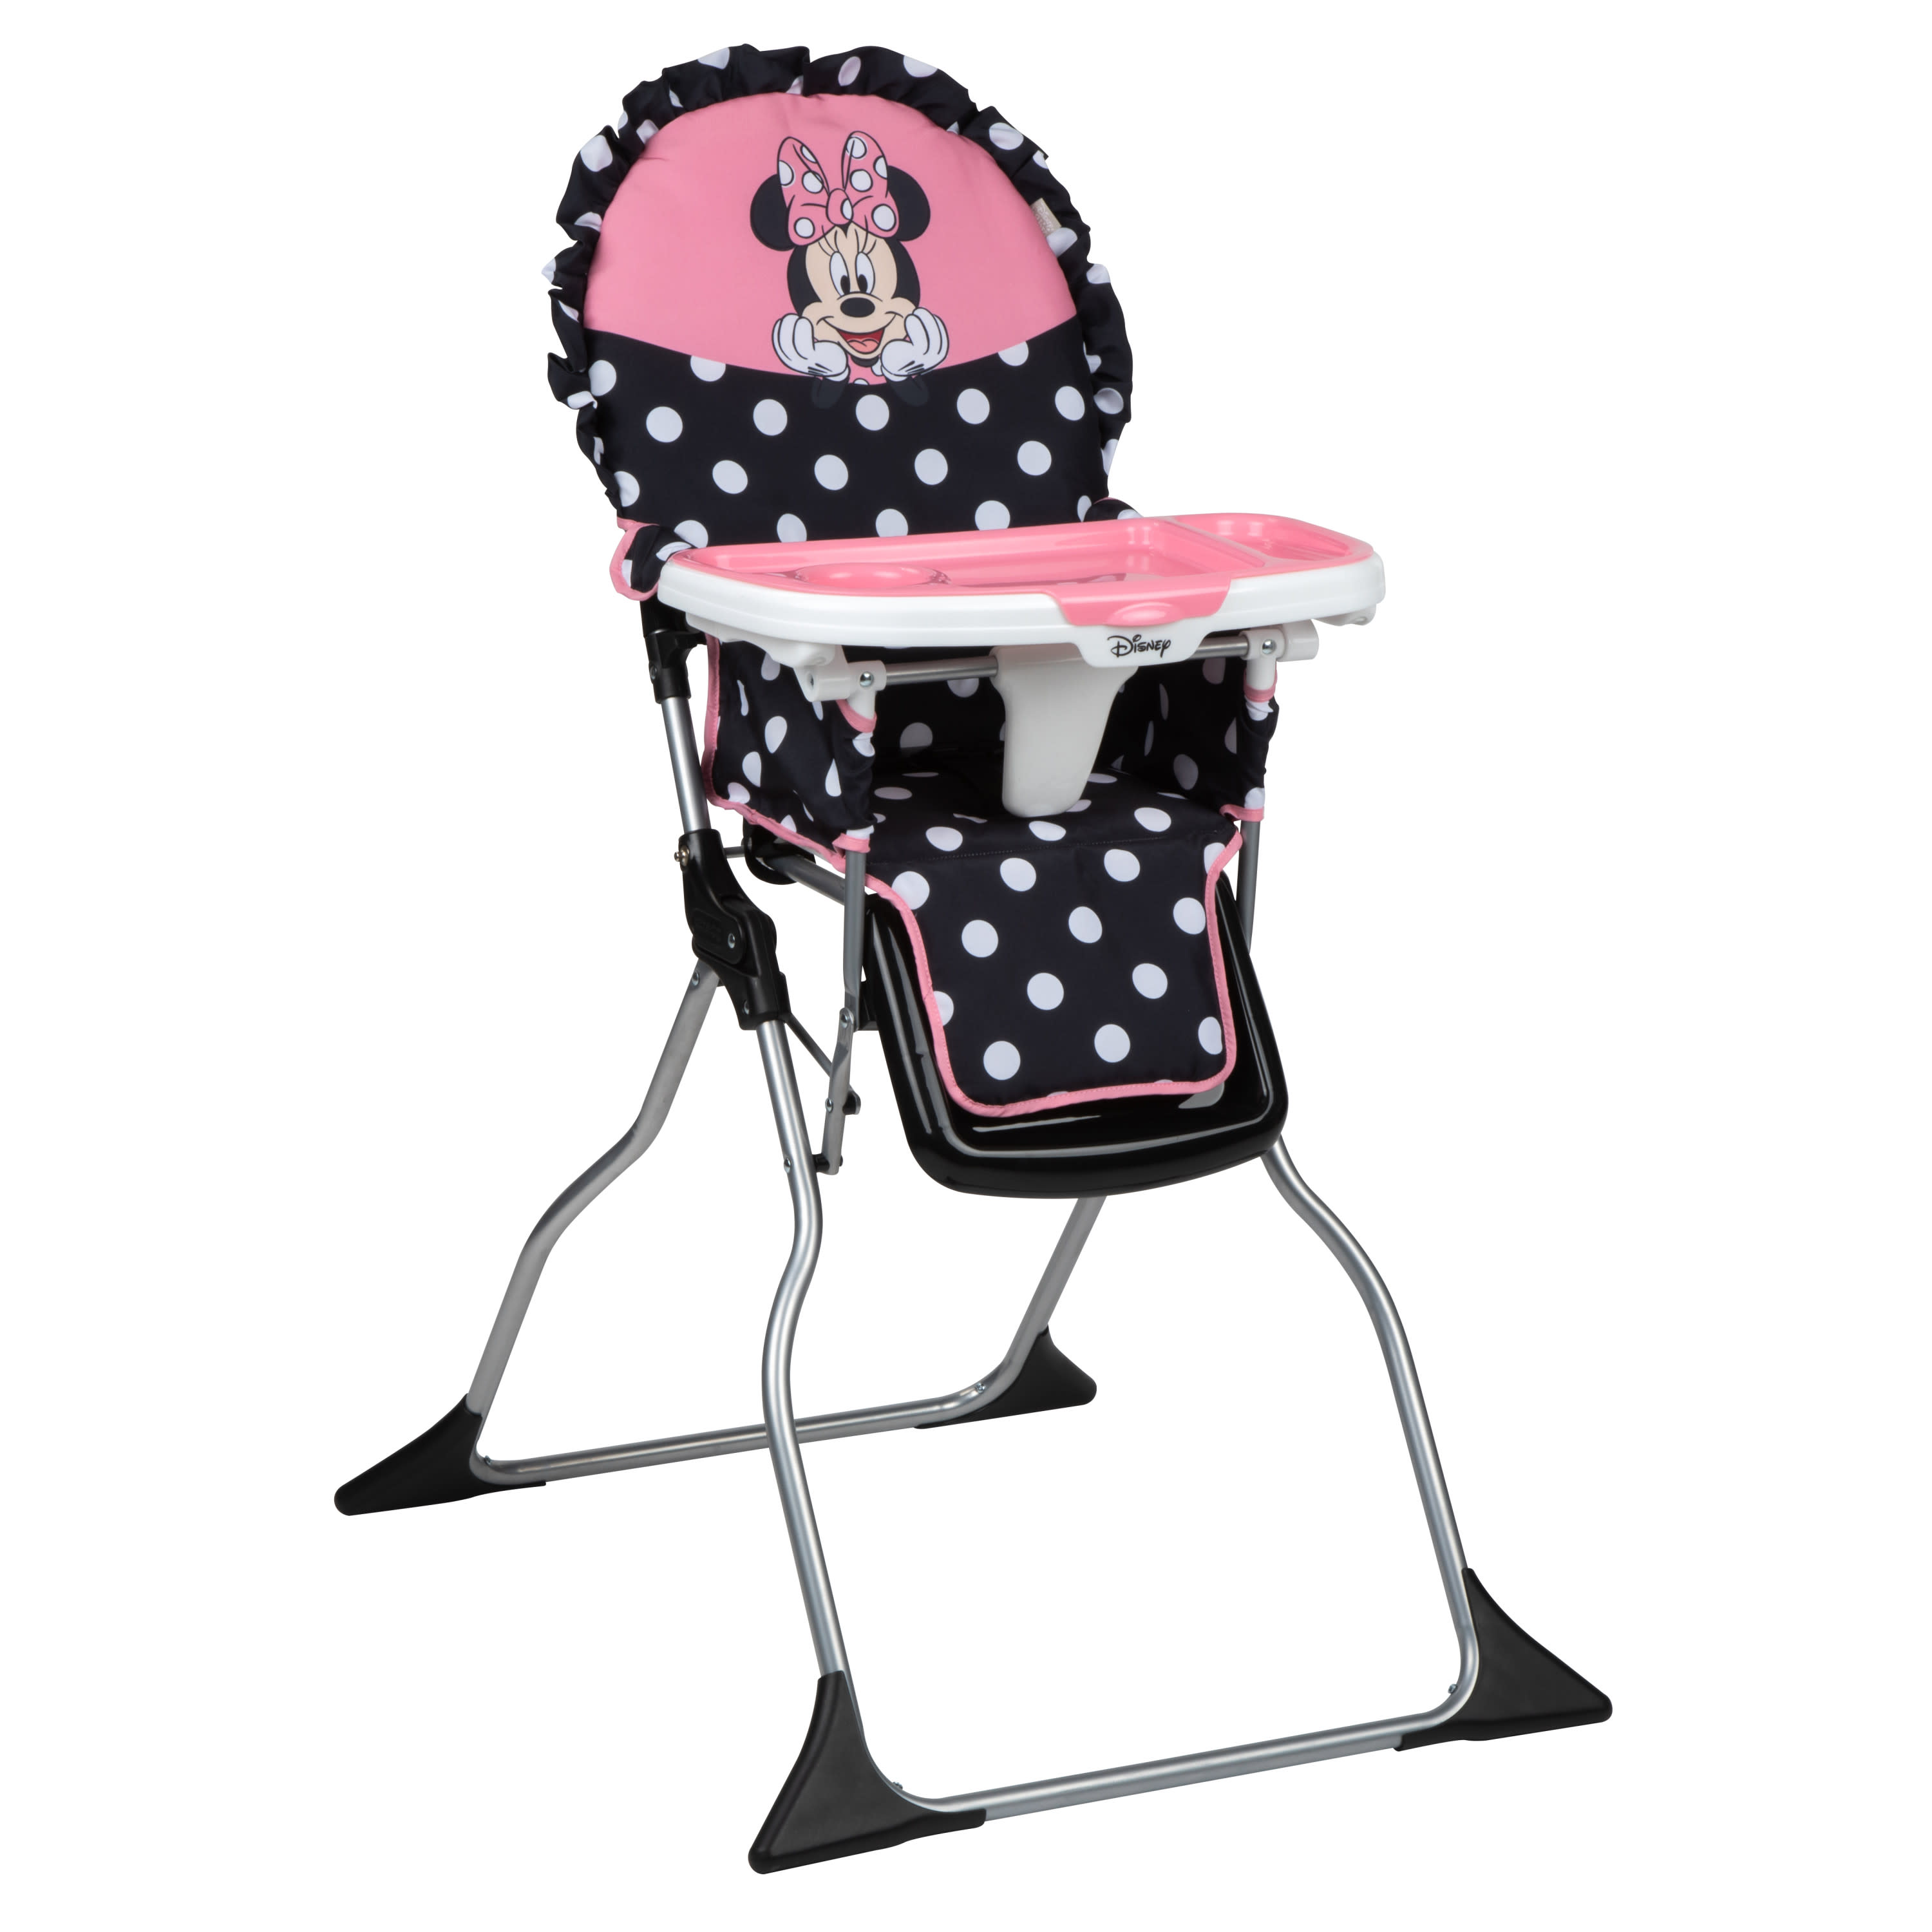 Disney Baby 3D Ultra Full Size High Chair, Peeking Minnie - image 14 of 16